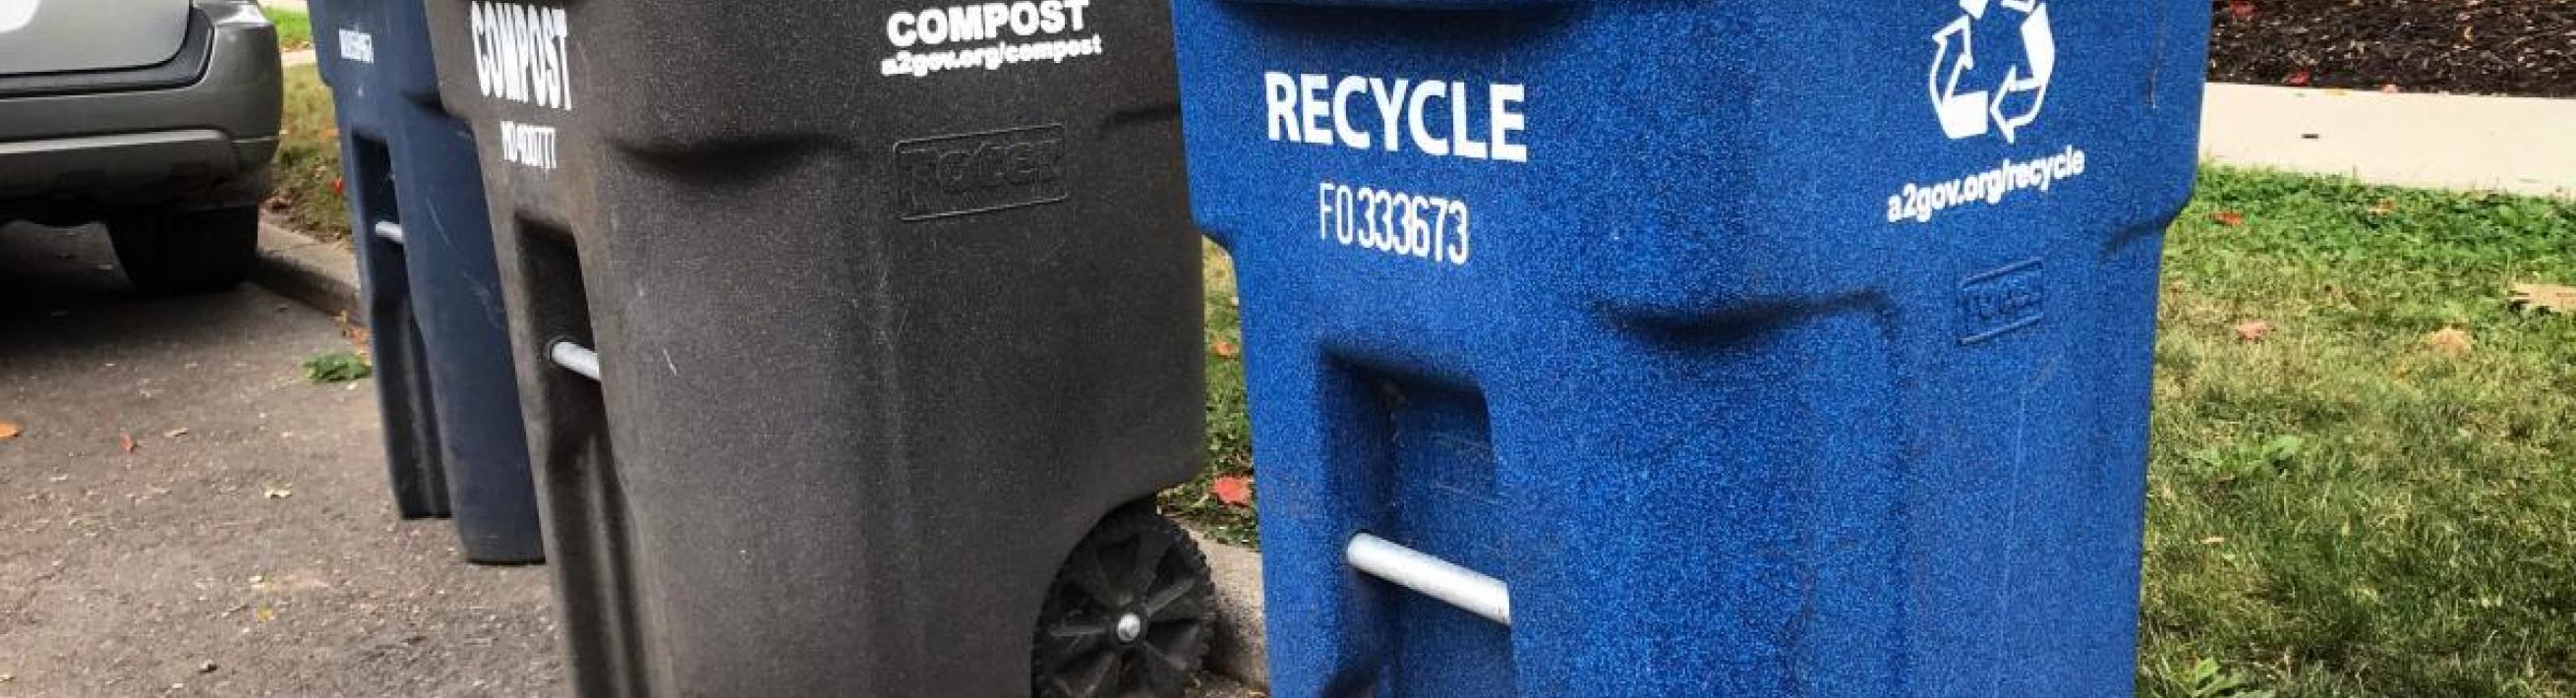 Ann Arbor recycle bins